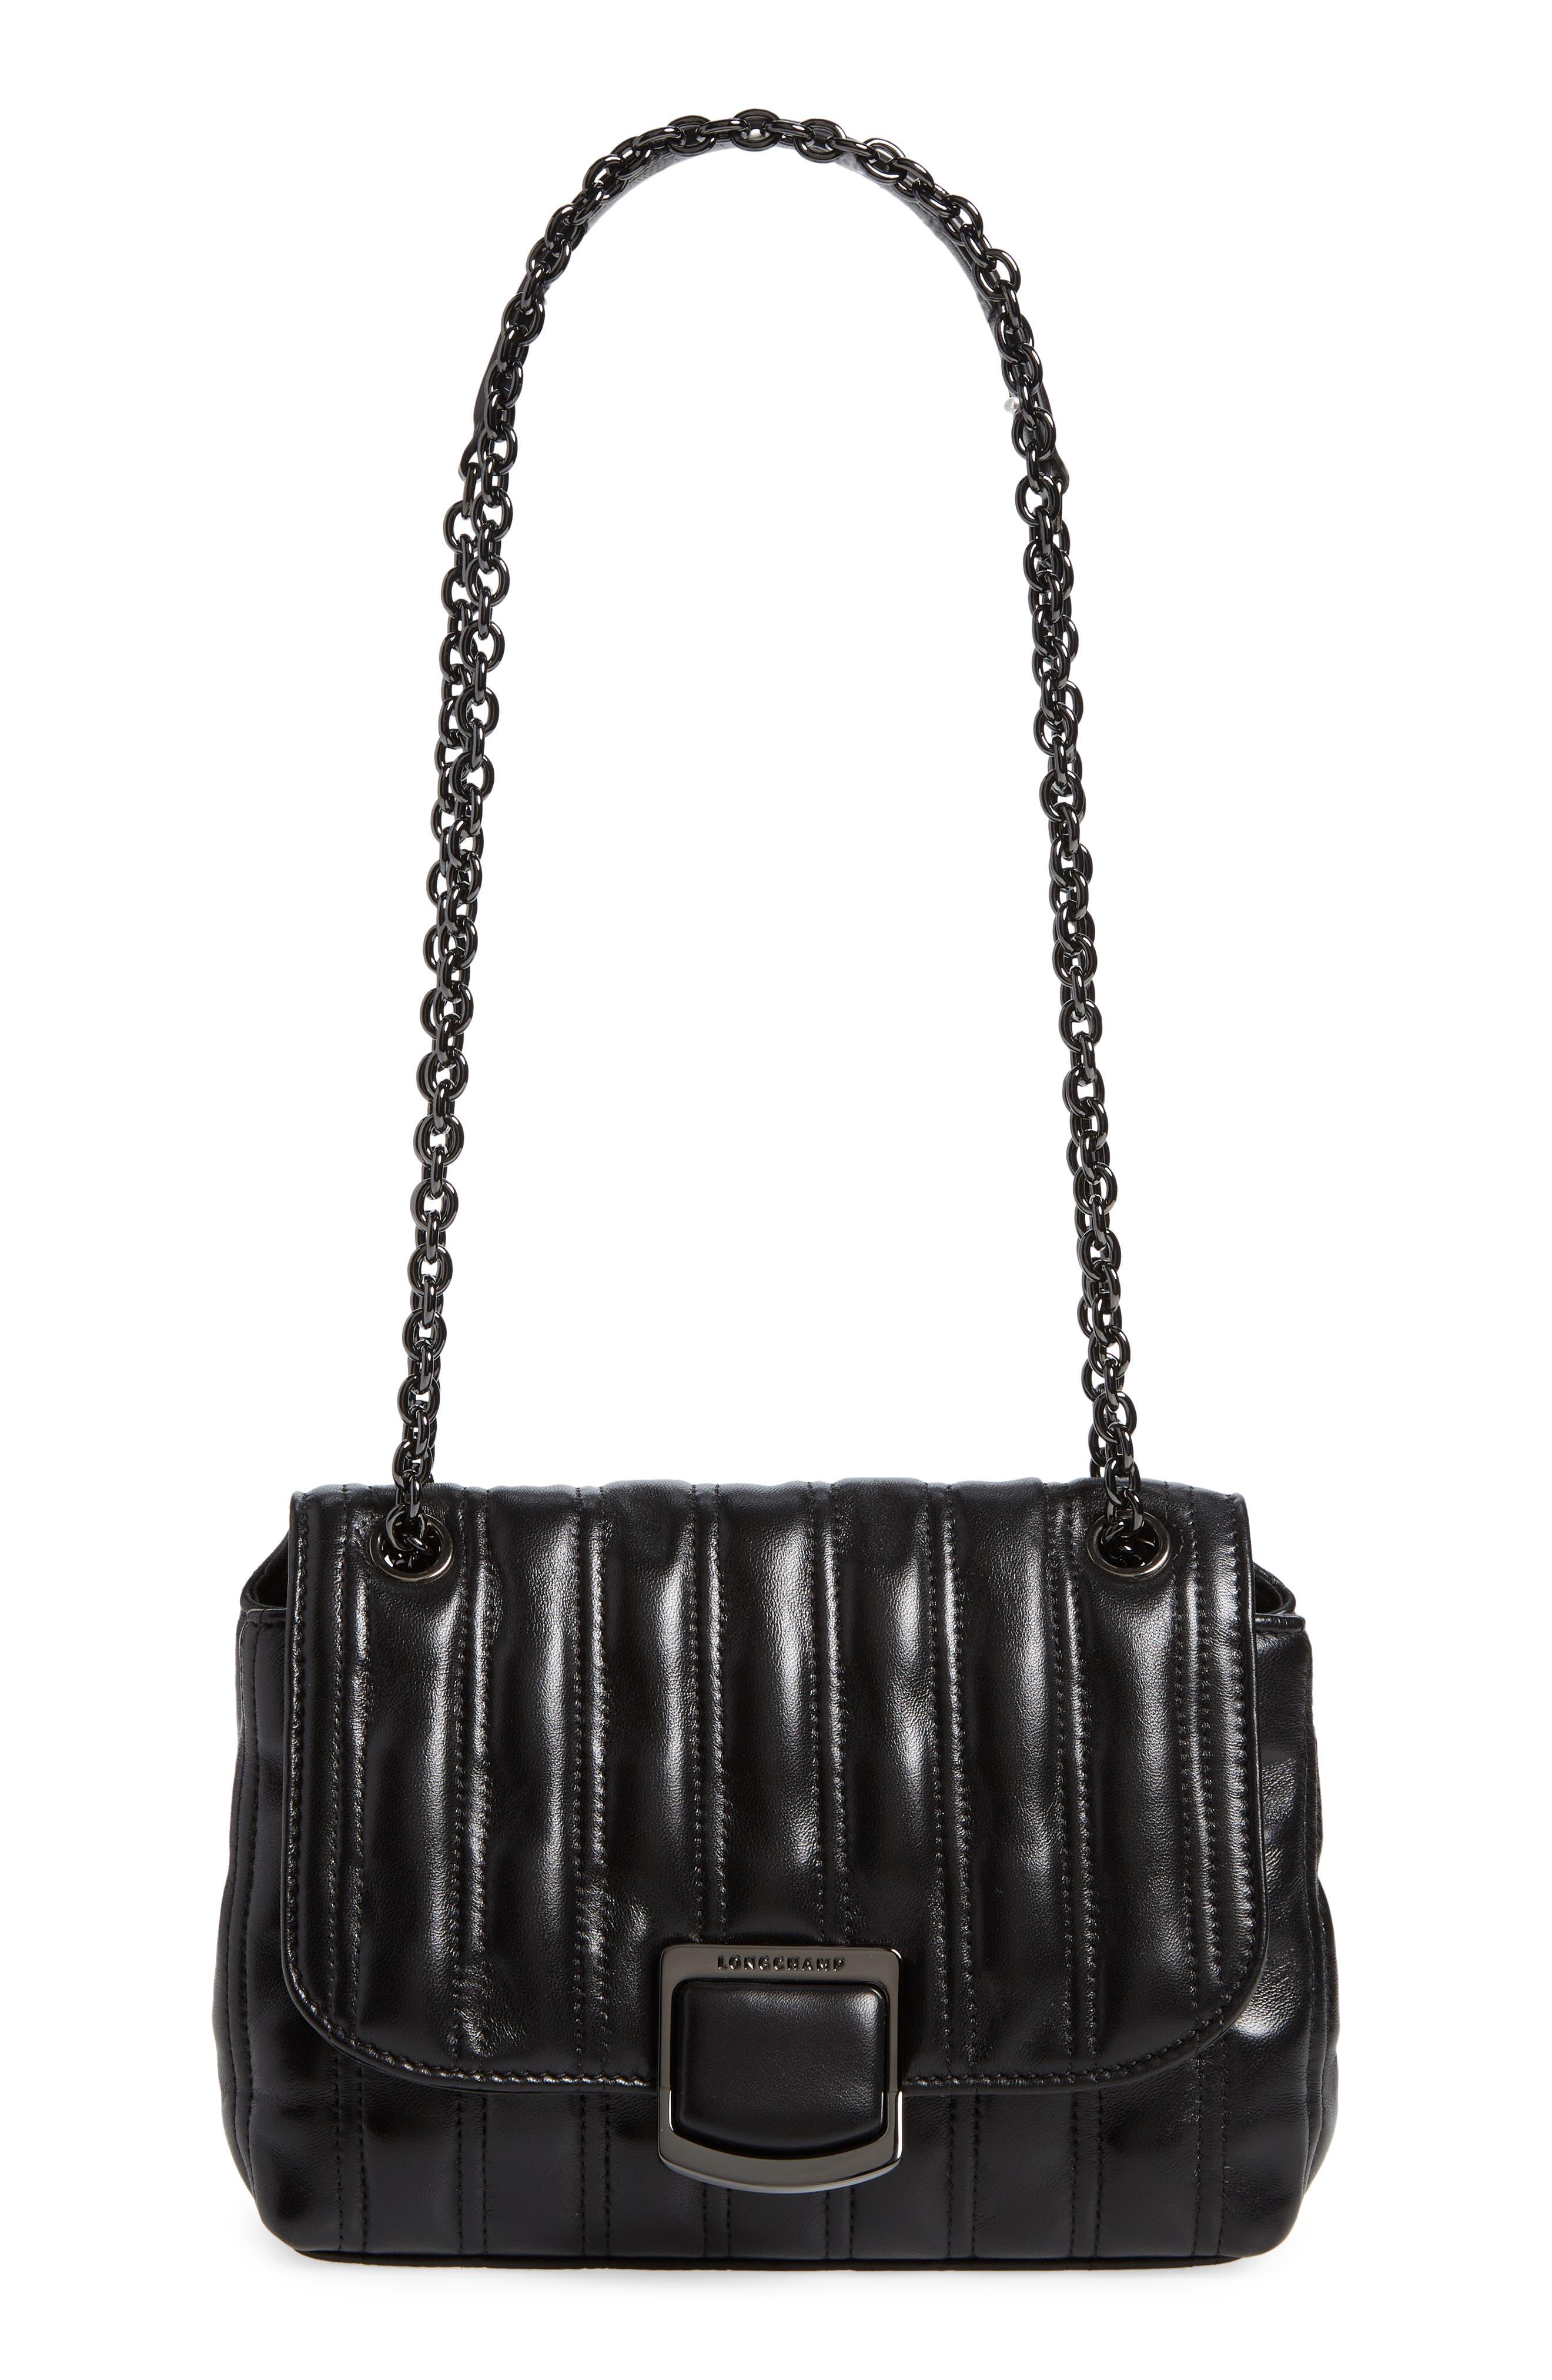 Longchamp Brioche Small Leather Shoulder Bag in Black | Lyst